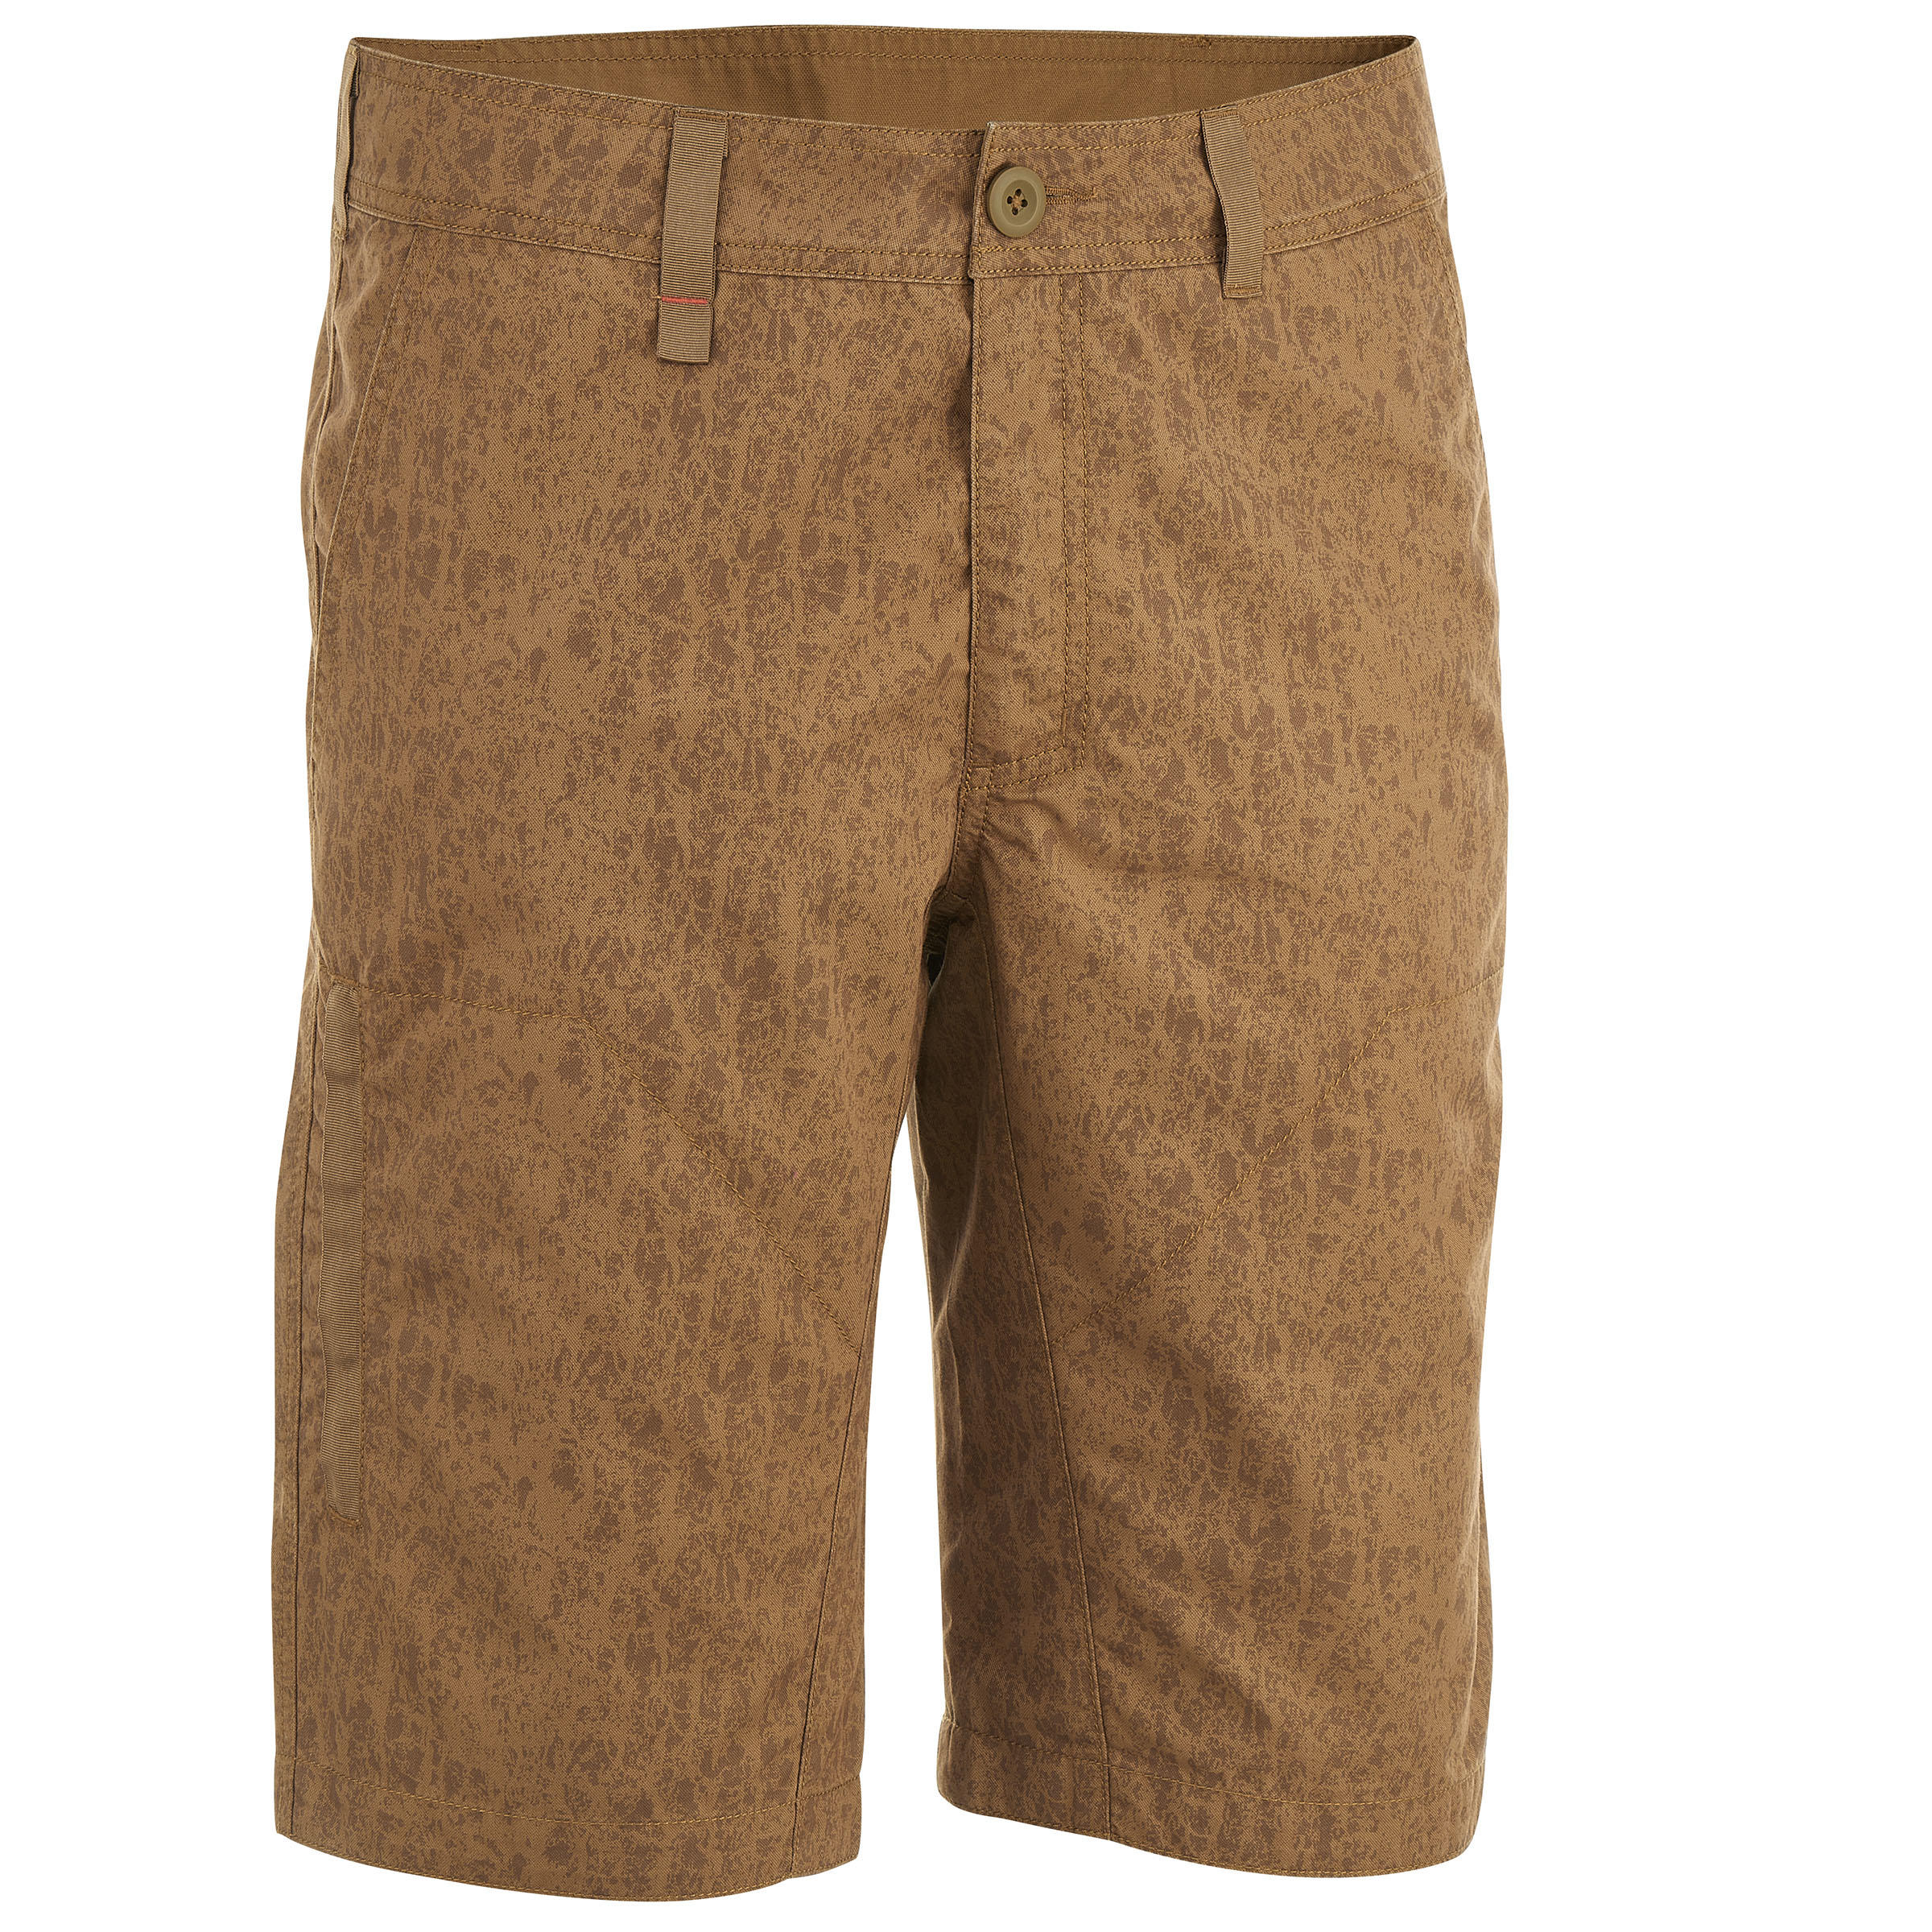 QUECHUA Arpenaz 100 Men's Hiking Shorts - Brown Motif